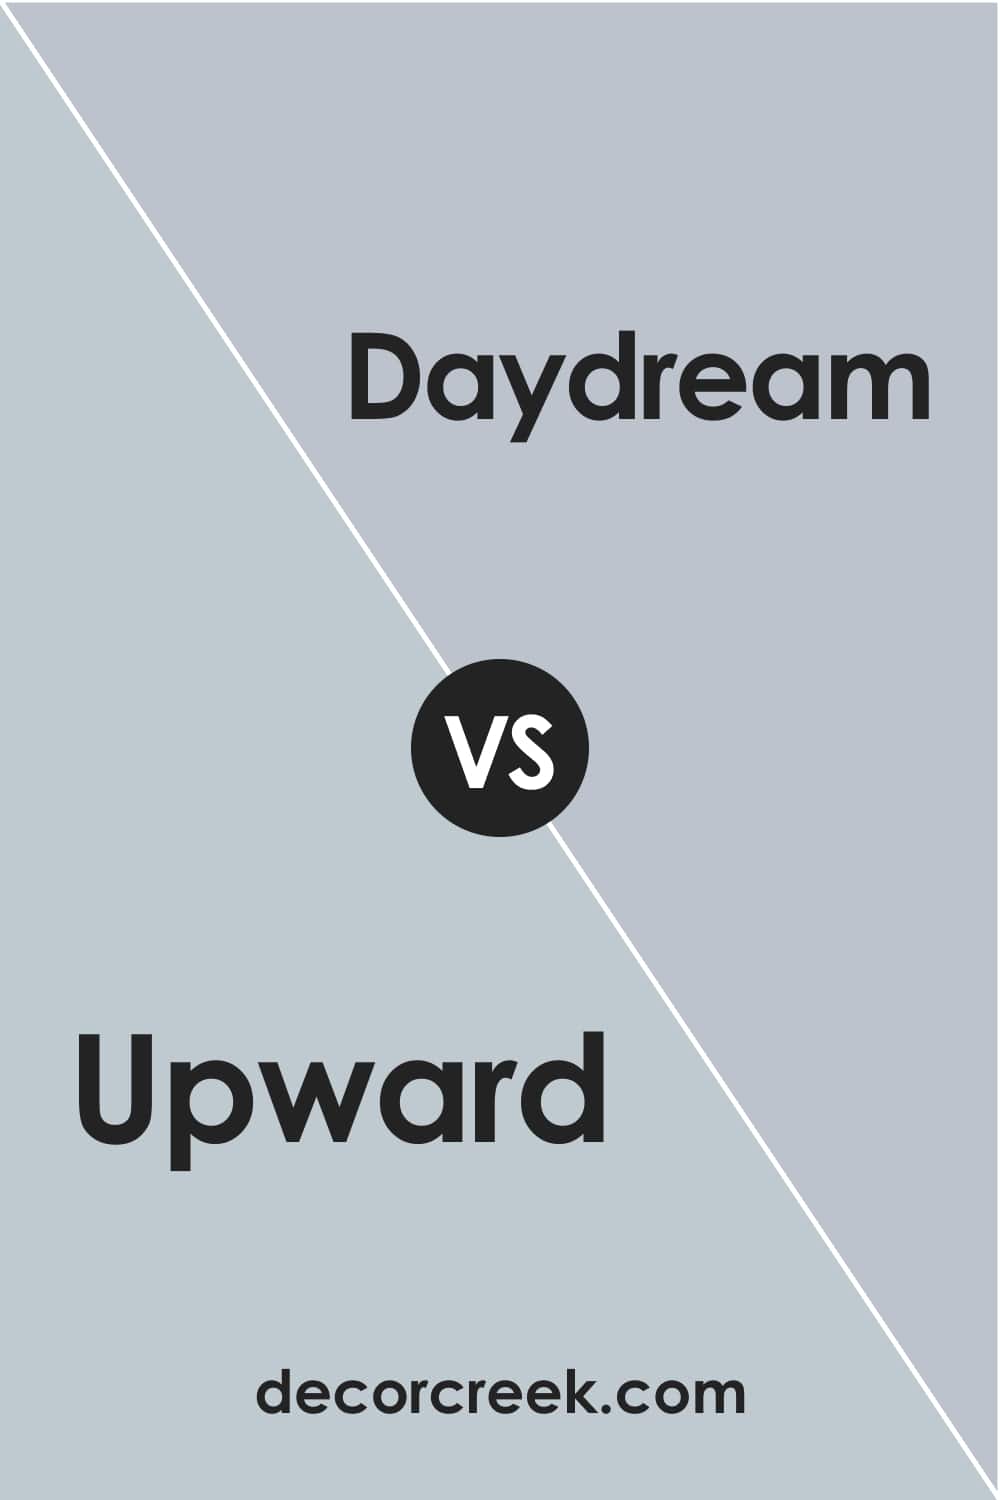 Upward vs Daydream